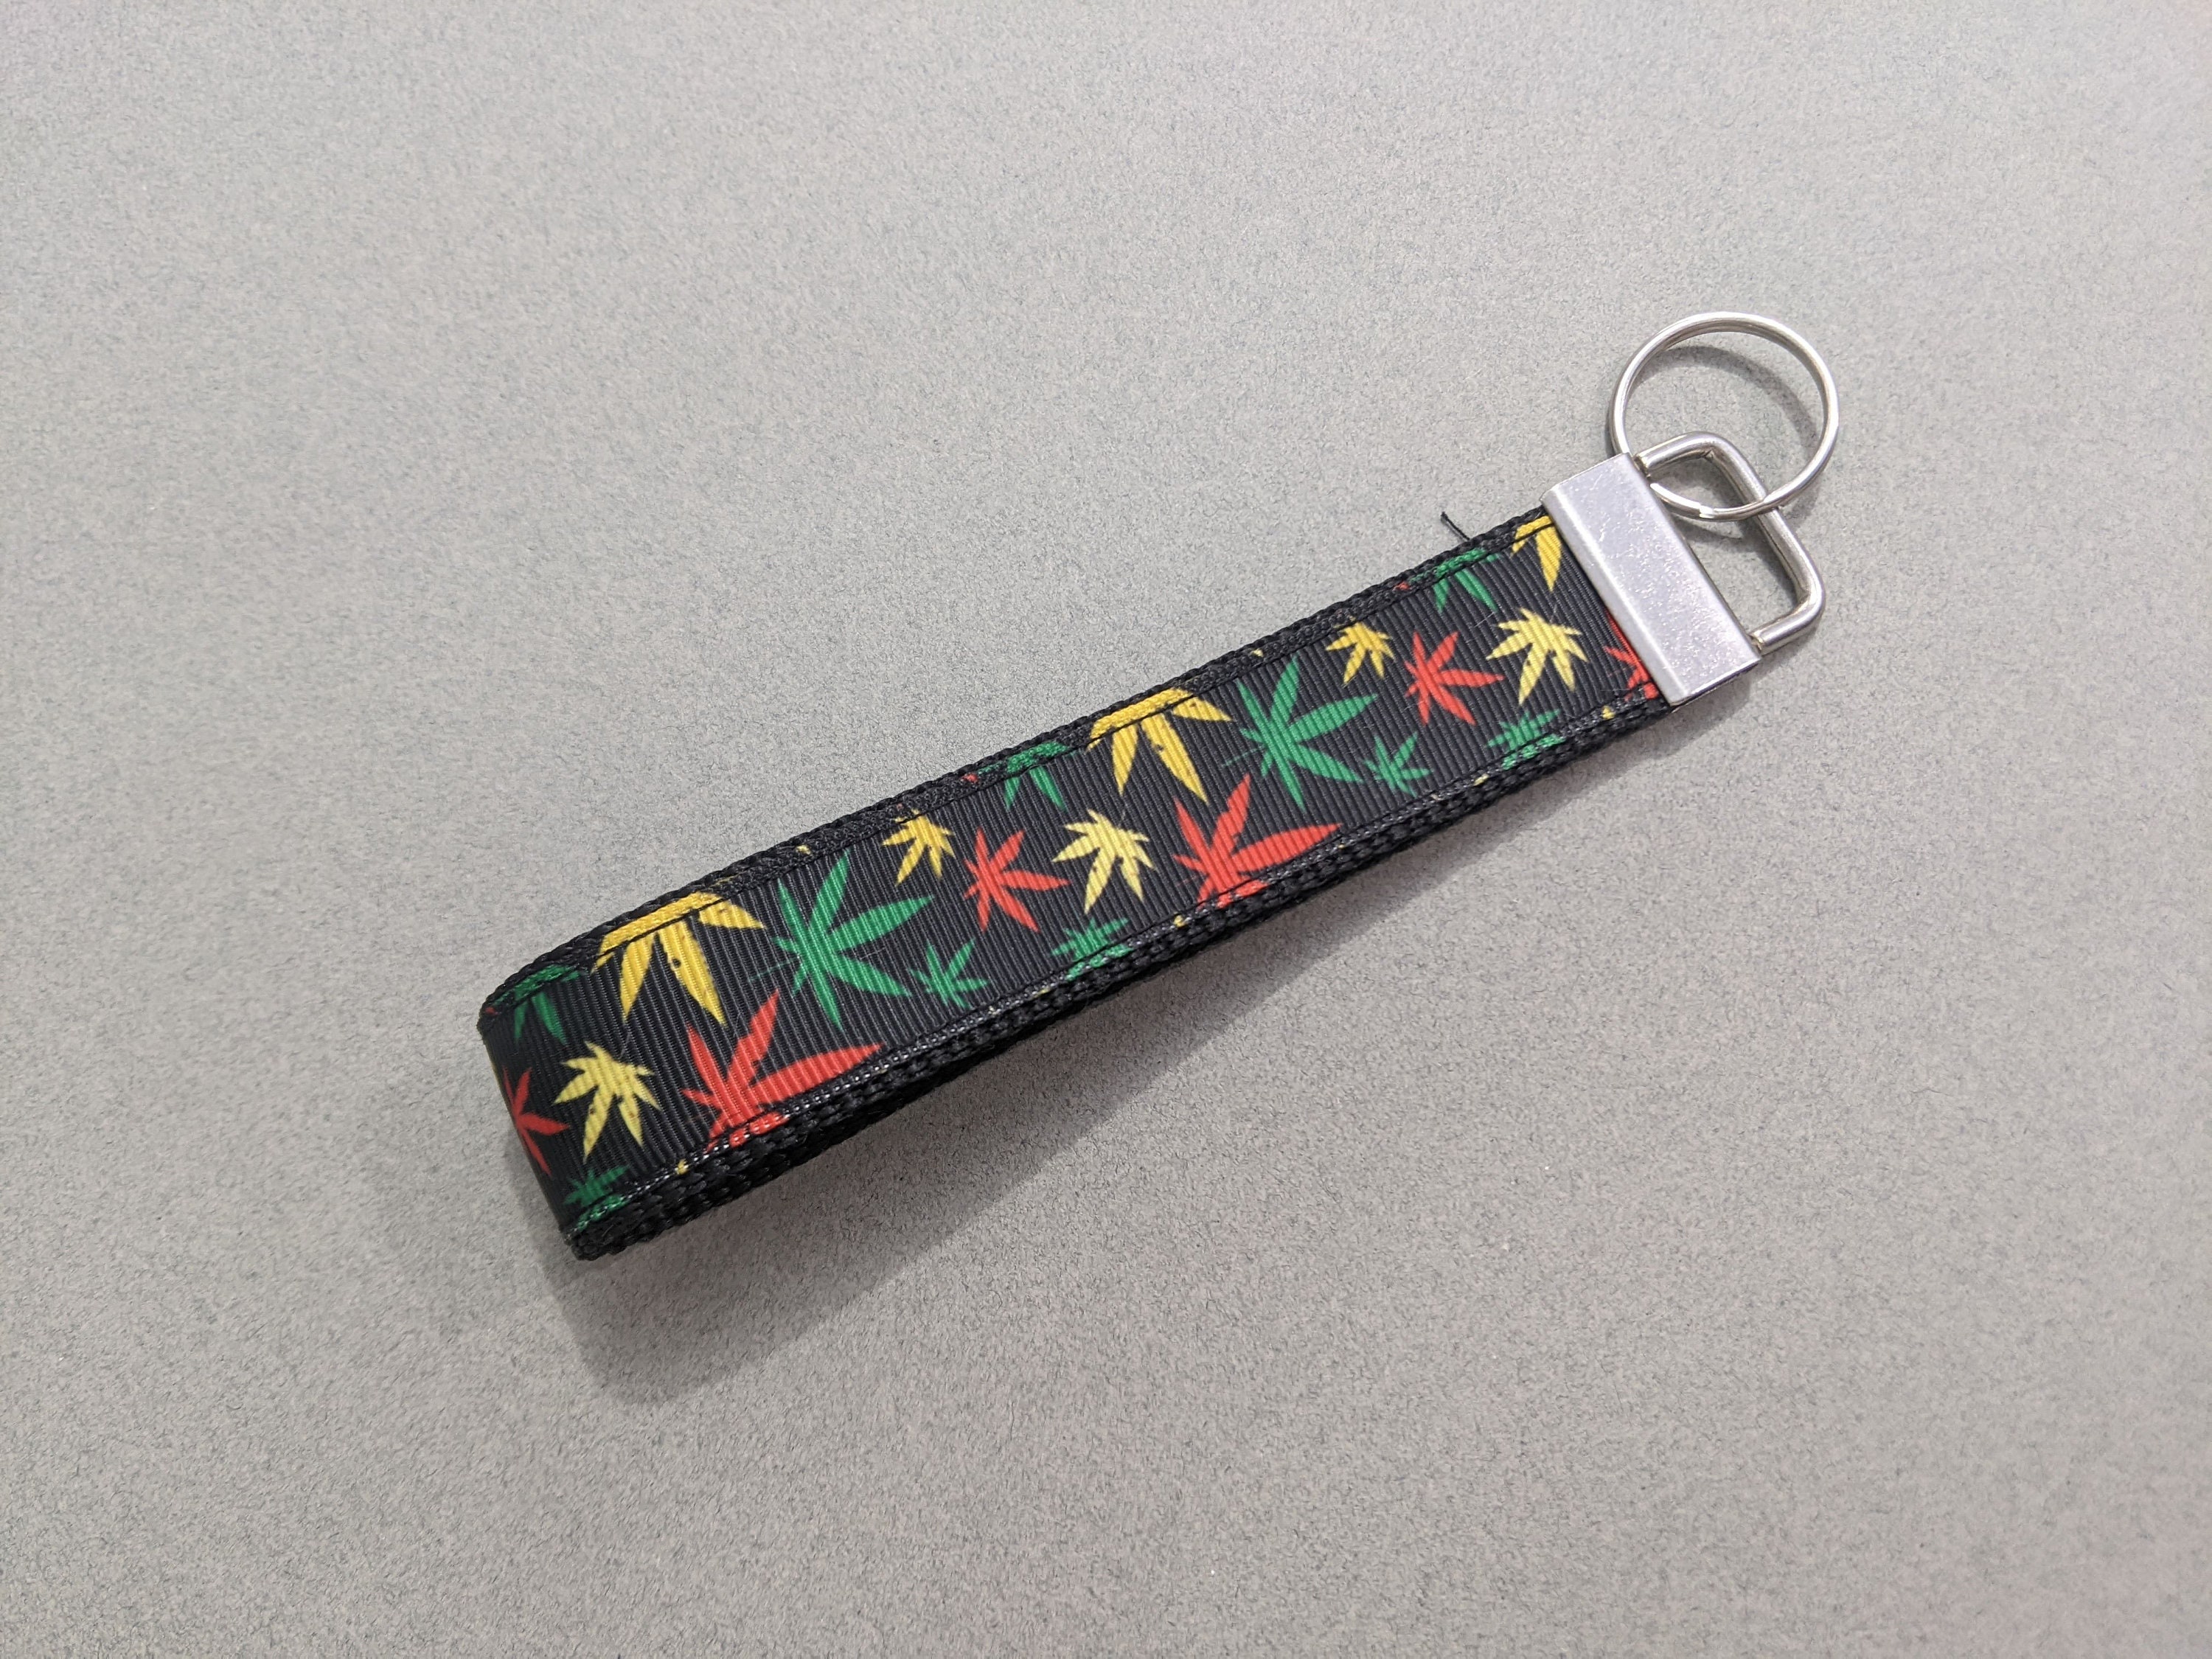 Marijuana Leaf Acrylic Blank for Key Chains, Badge Reels, Backpack Tags,  Memory Keepers, or Resin 